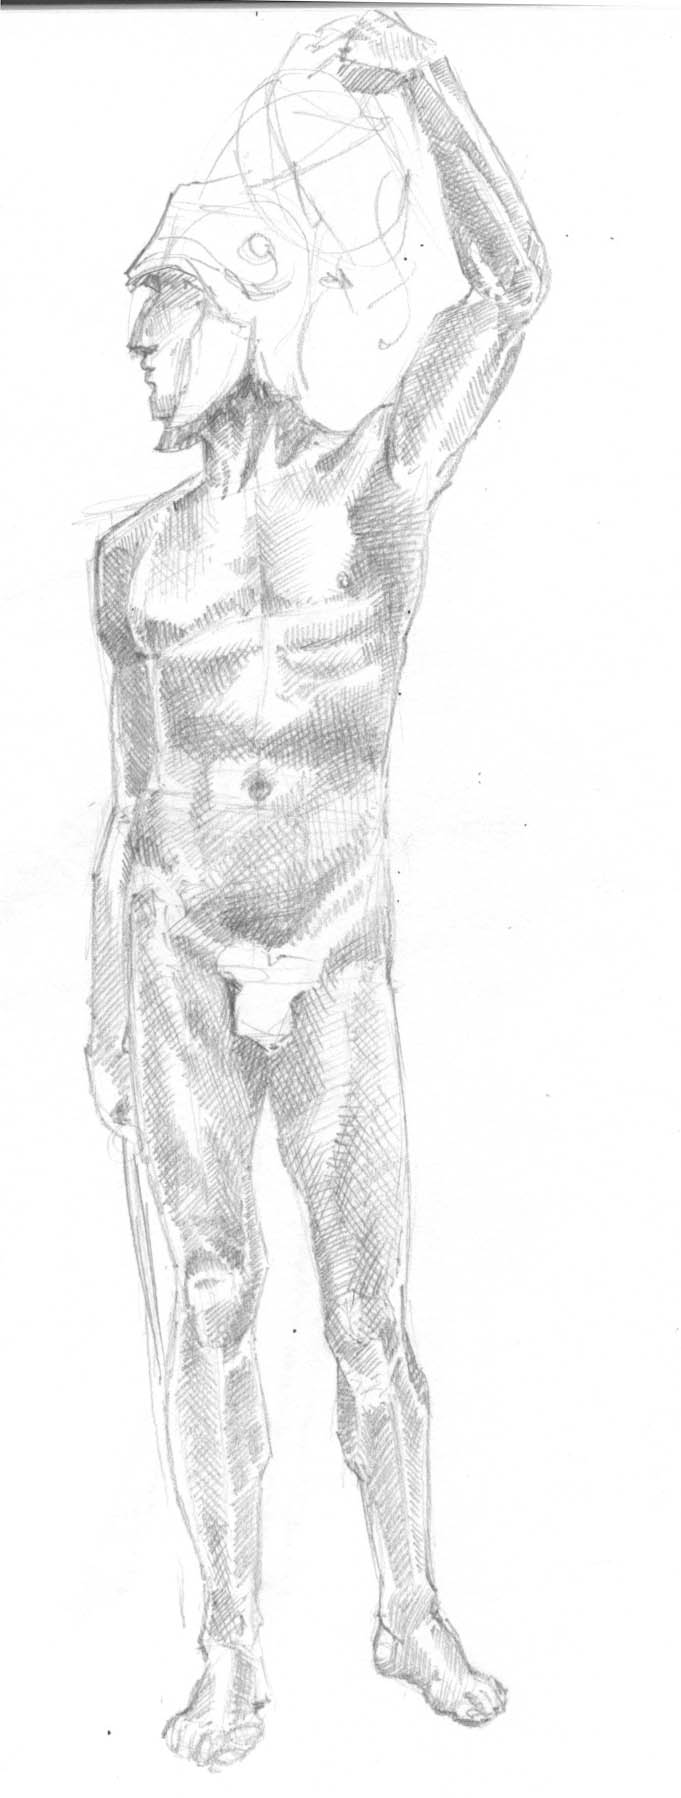 pencil sketch of sculpture of Perseus holding Medusa's head aloft